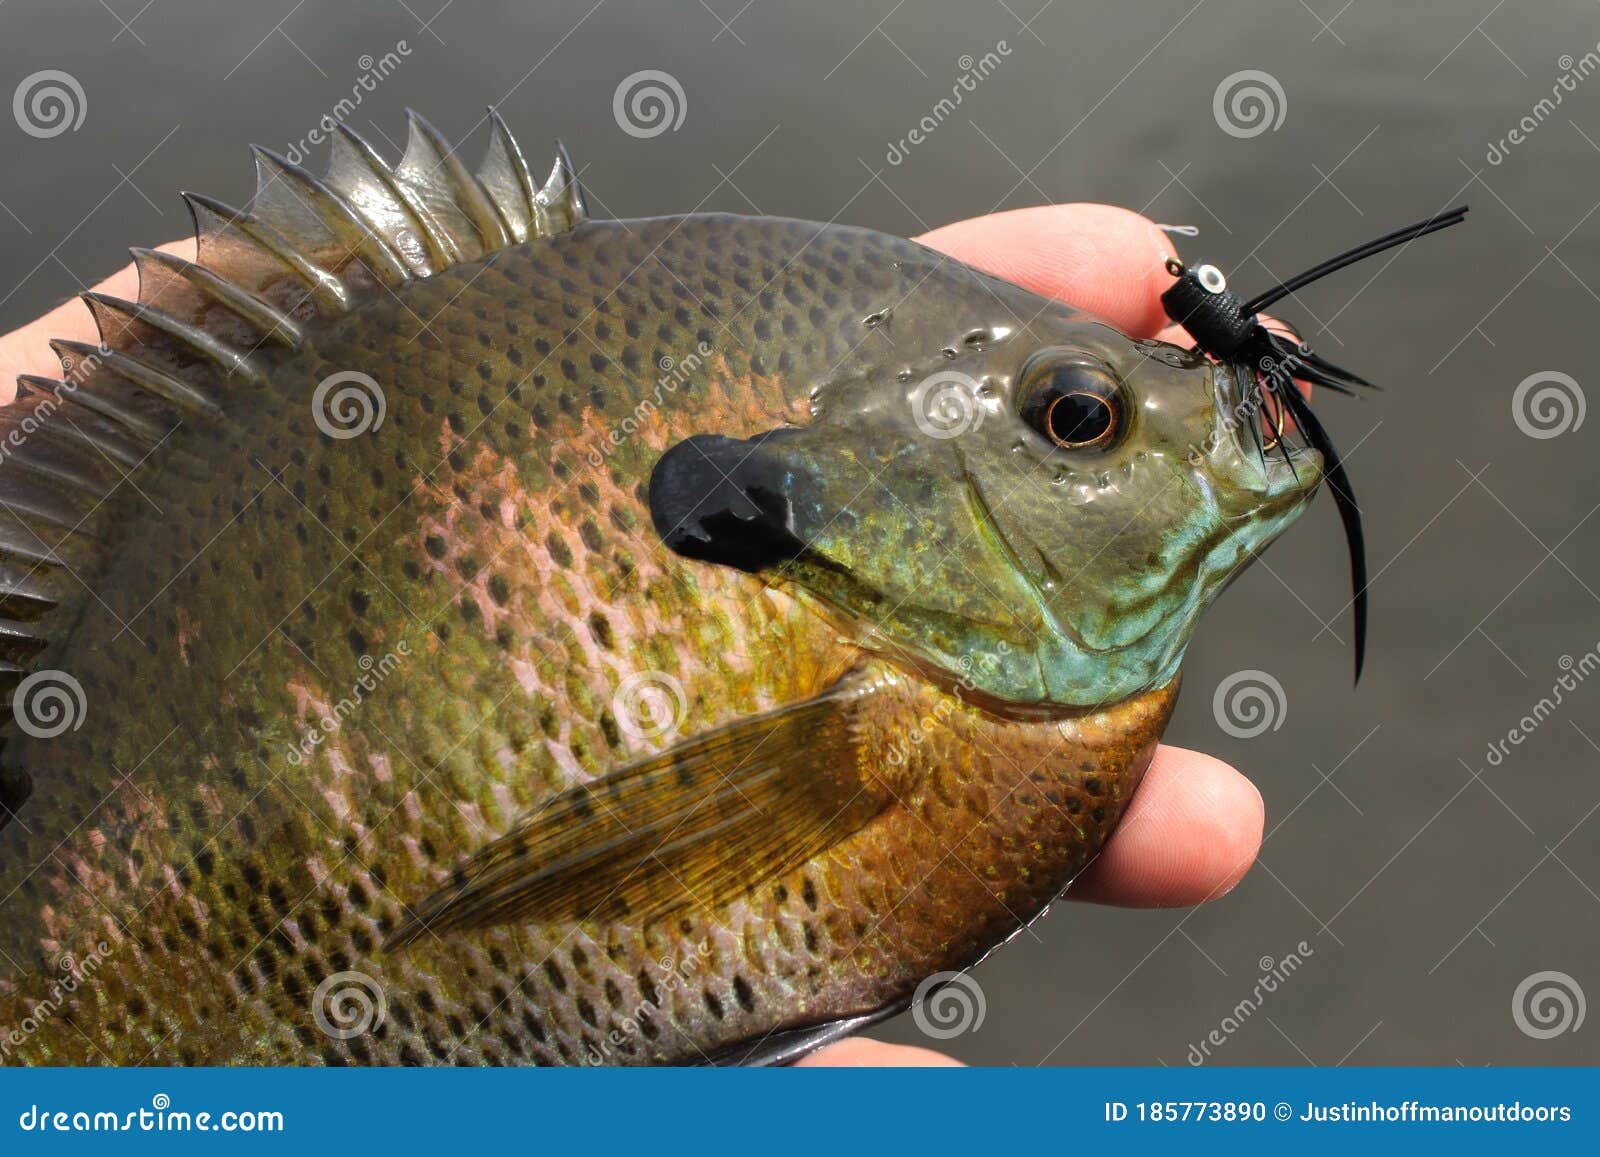 bluegill panfish caught fly fishing